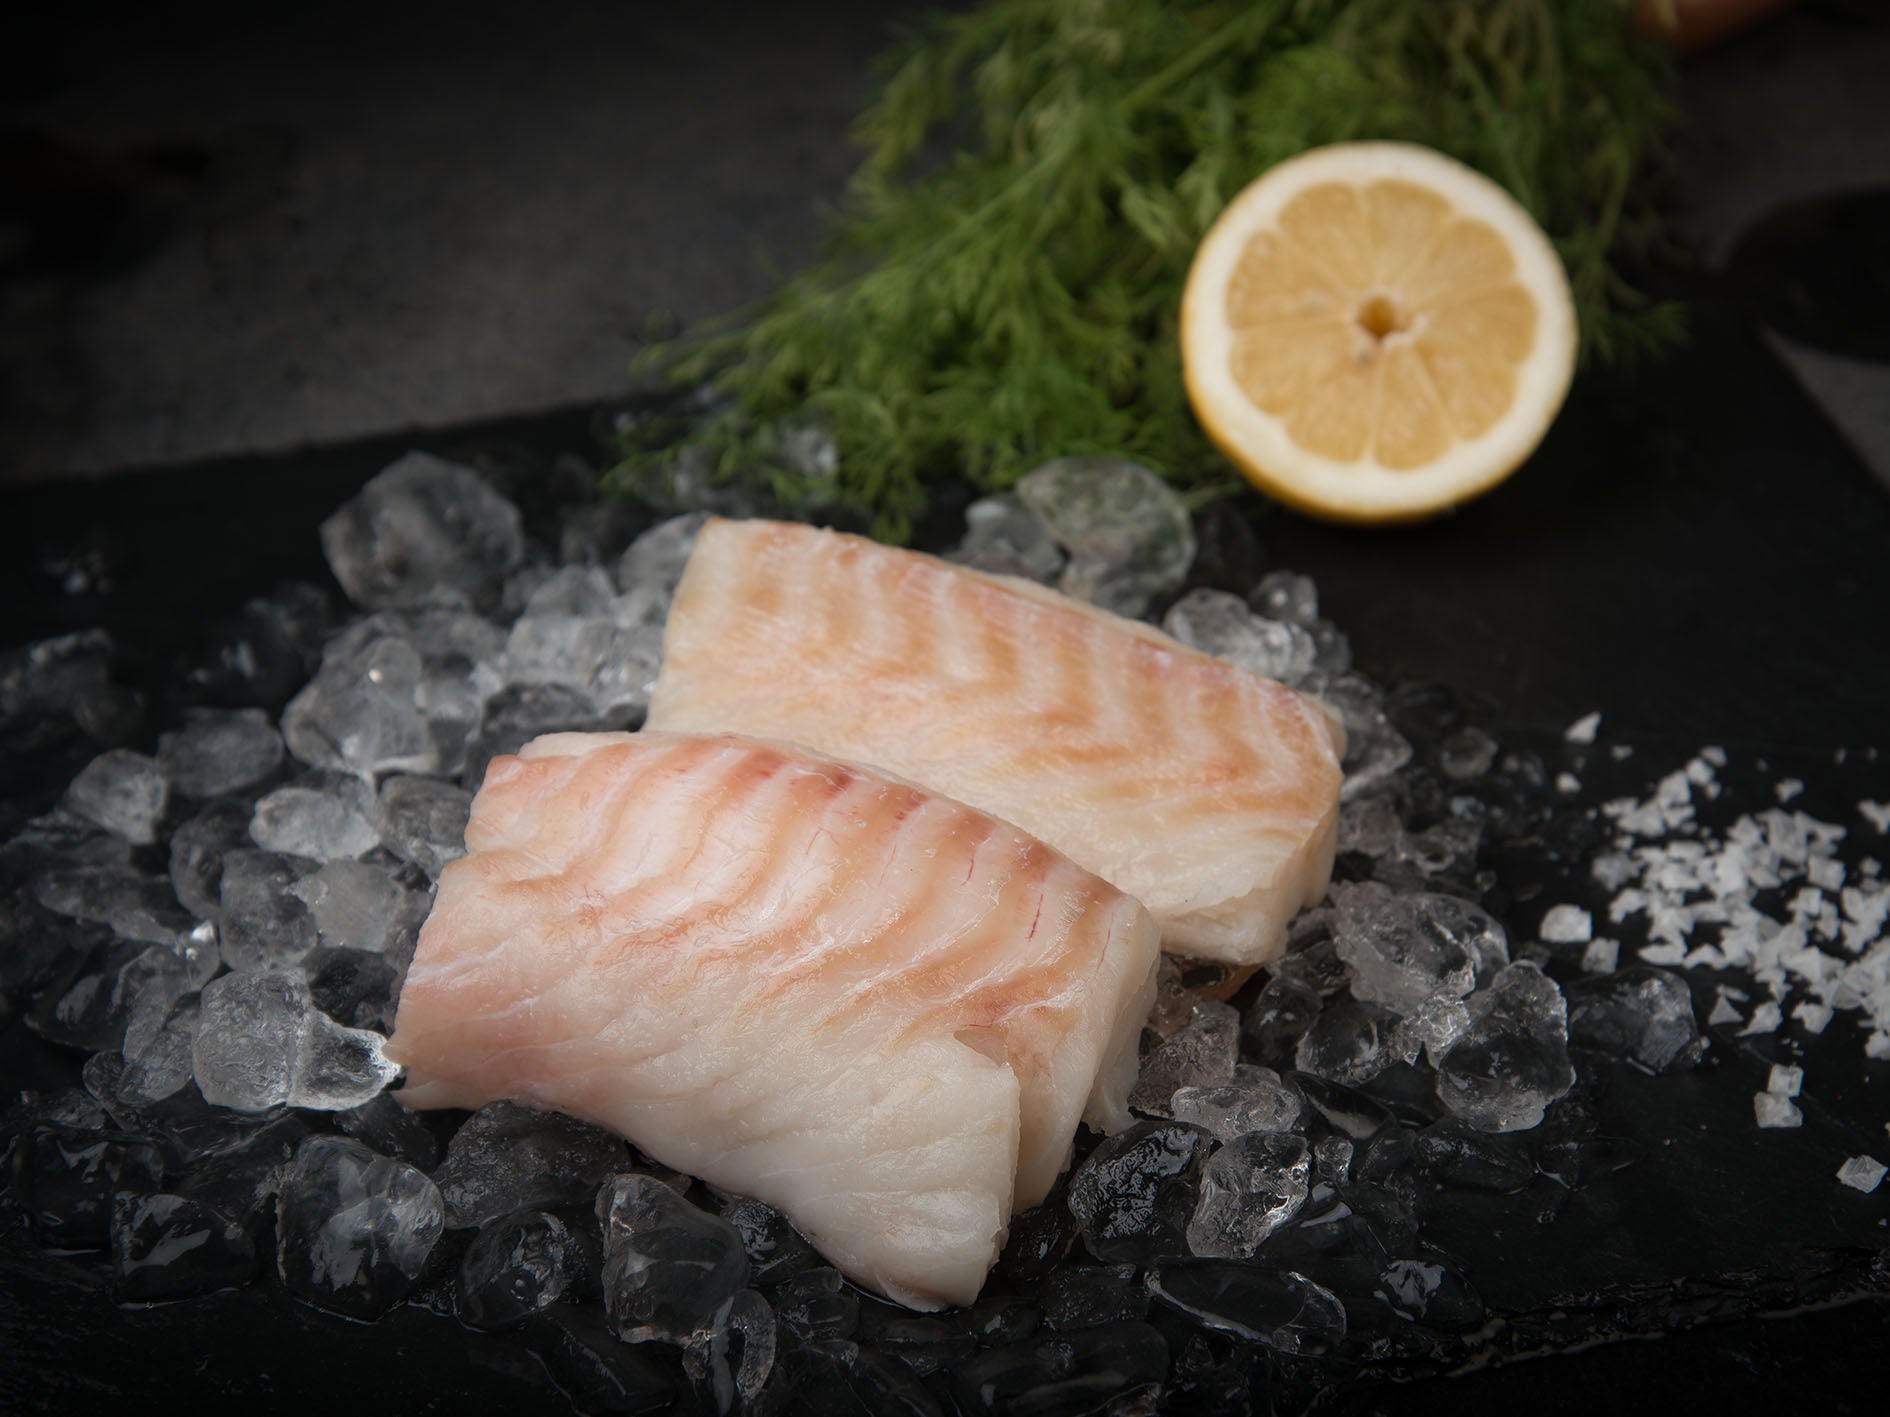 Torsk köpa Torskrygg köpa fisk köpa skaldjur hemleverans stockholm fisk och skaldjur av finaste kvalitet fiskbilen Sigges fisk